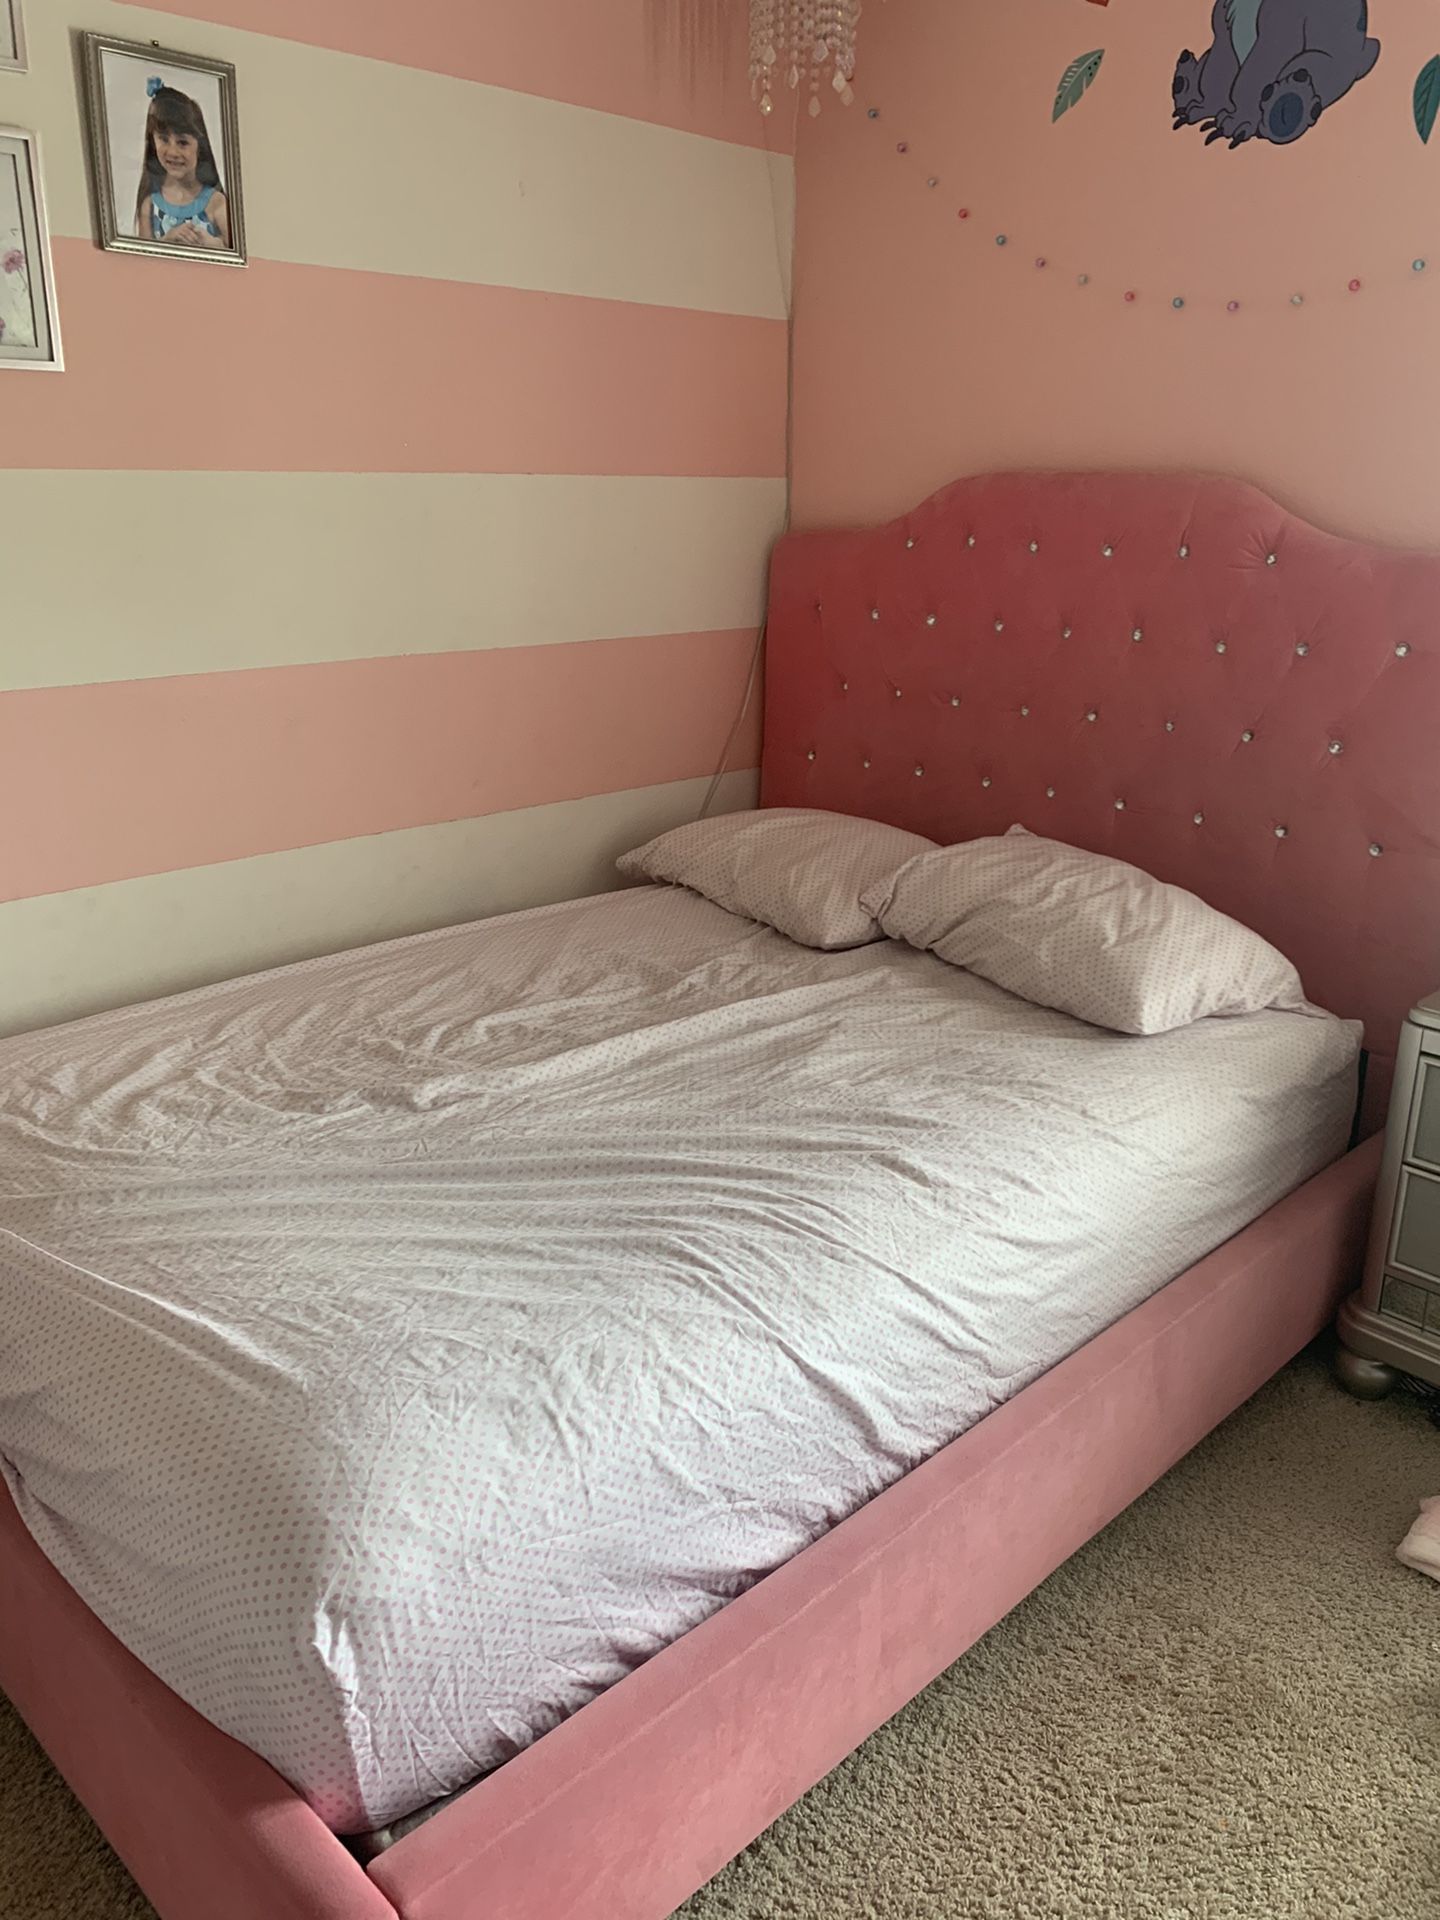 Full size bed frame pink